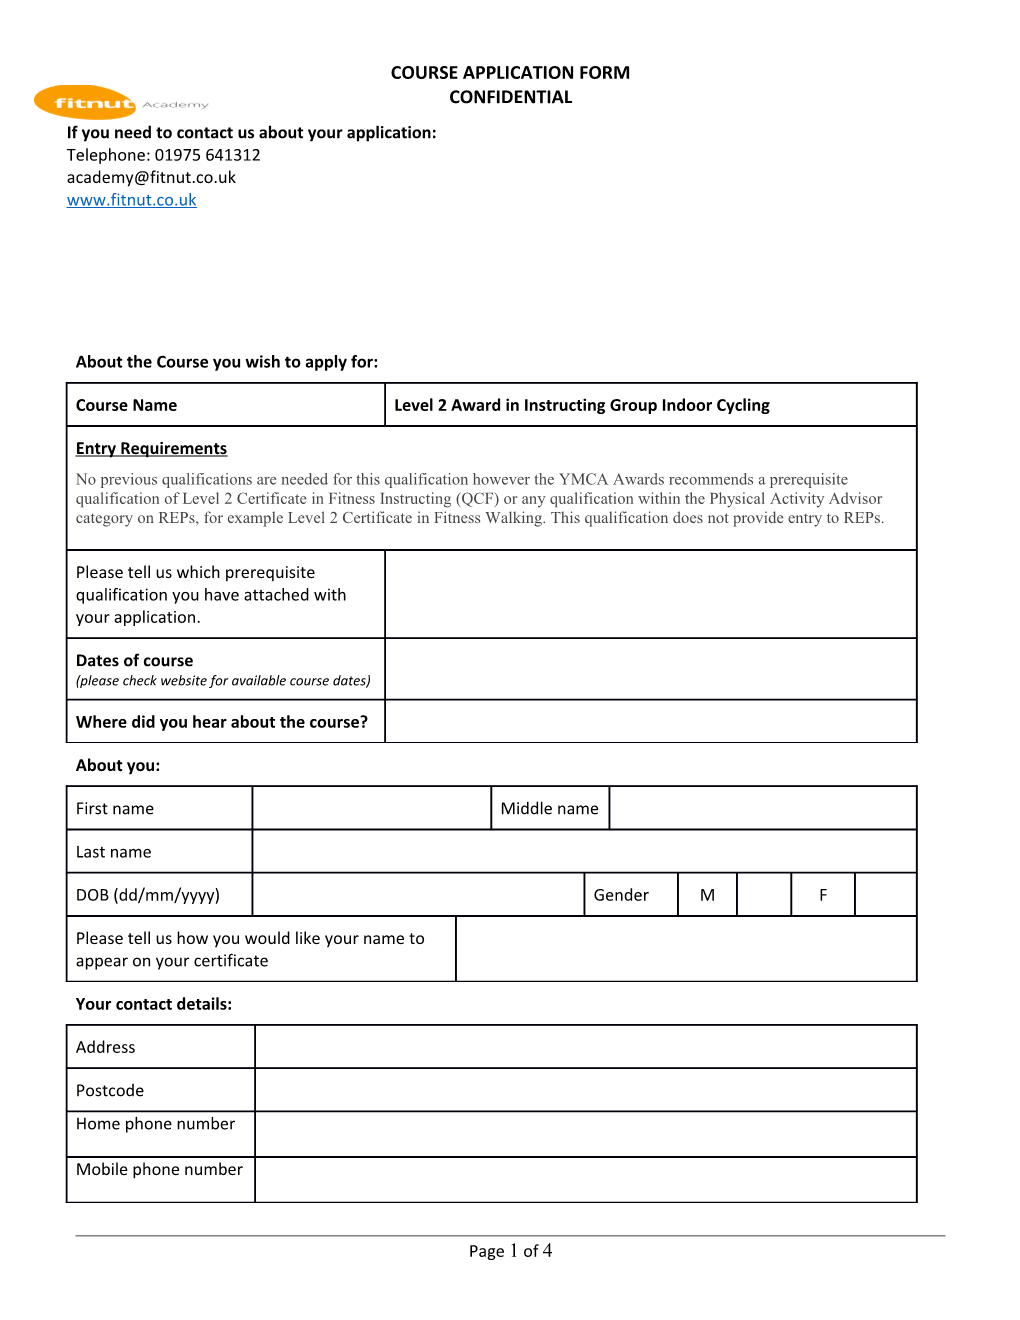 Fitnut Academy Course Application Form